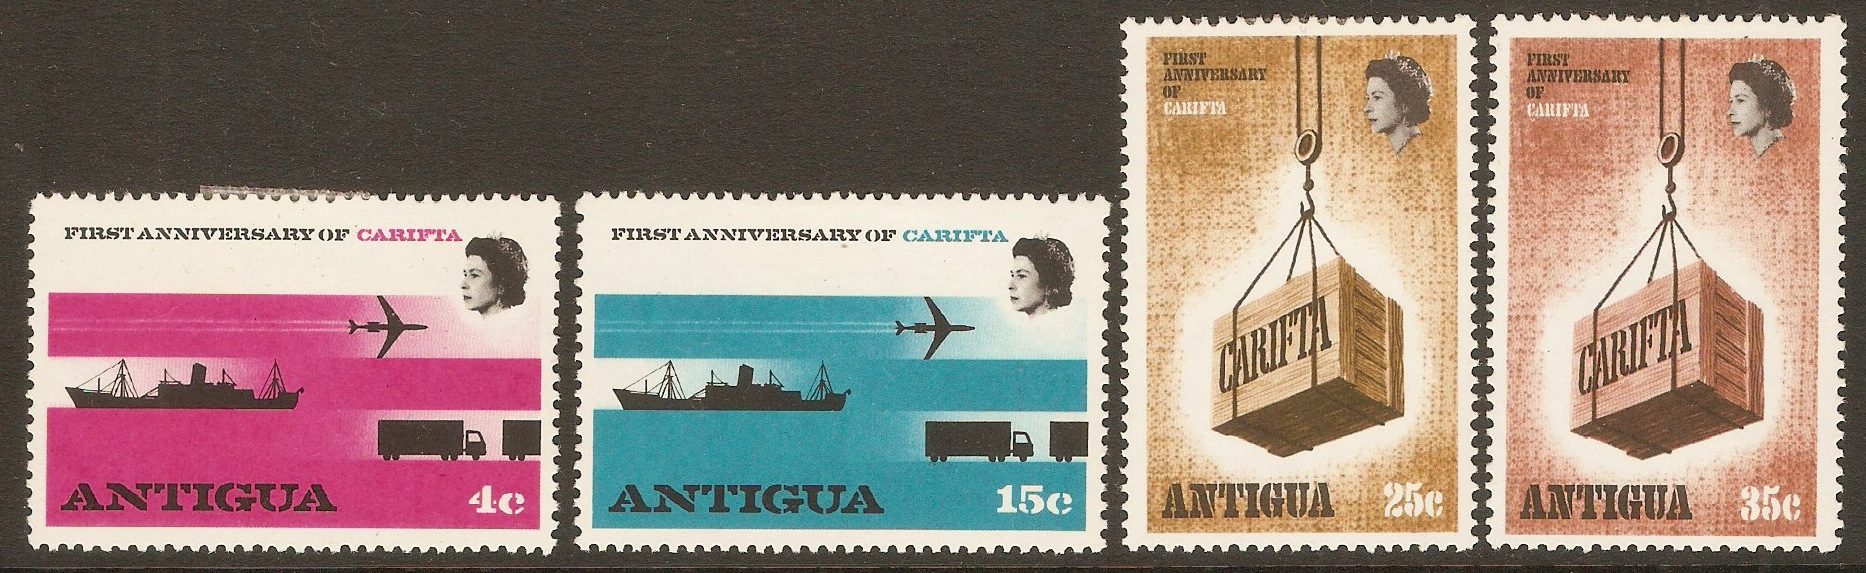 Antigua 1969 CARIFTA Anniversary set. SG230-SG233.